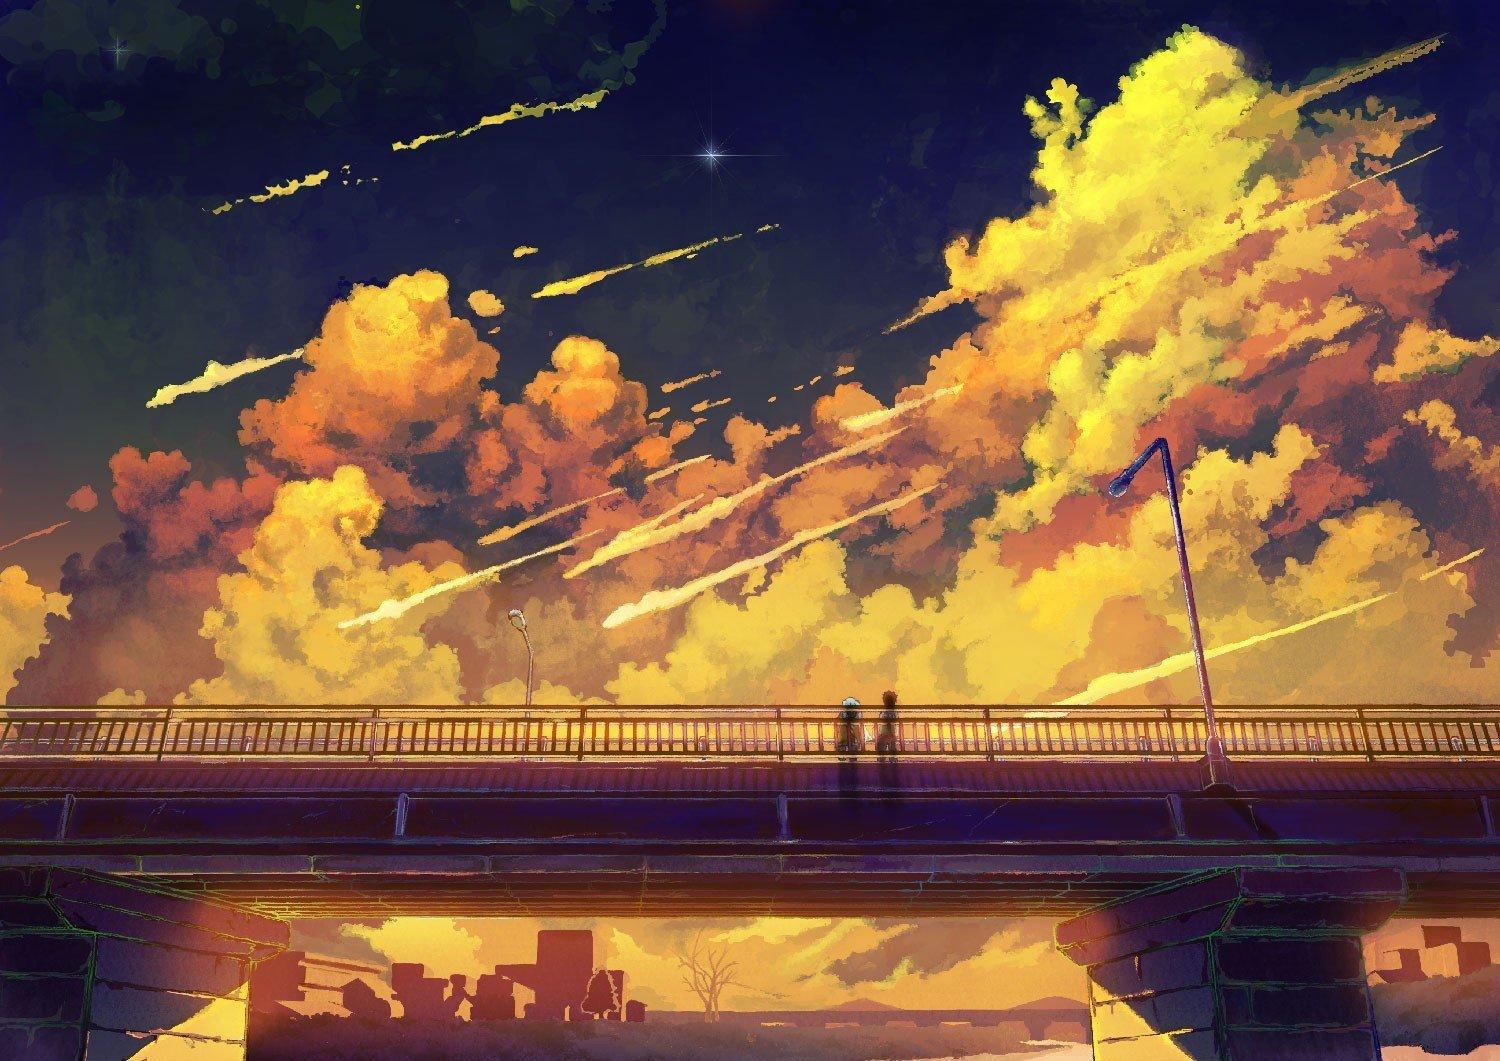 Wallpaper Bridge Anime Background Image Painting Stock Illustration  1475068517  Shutterstock